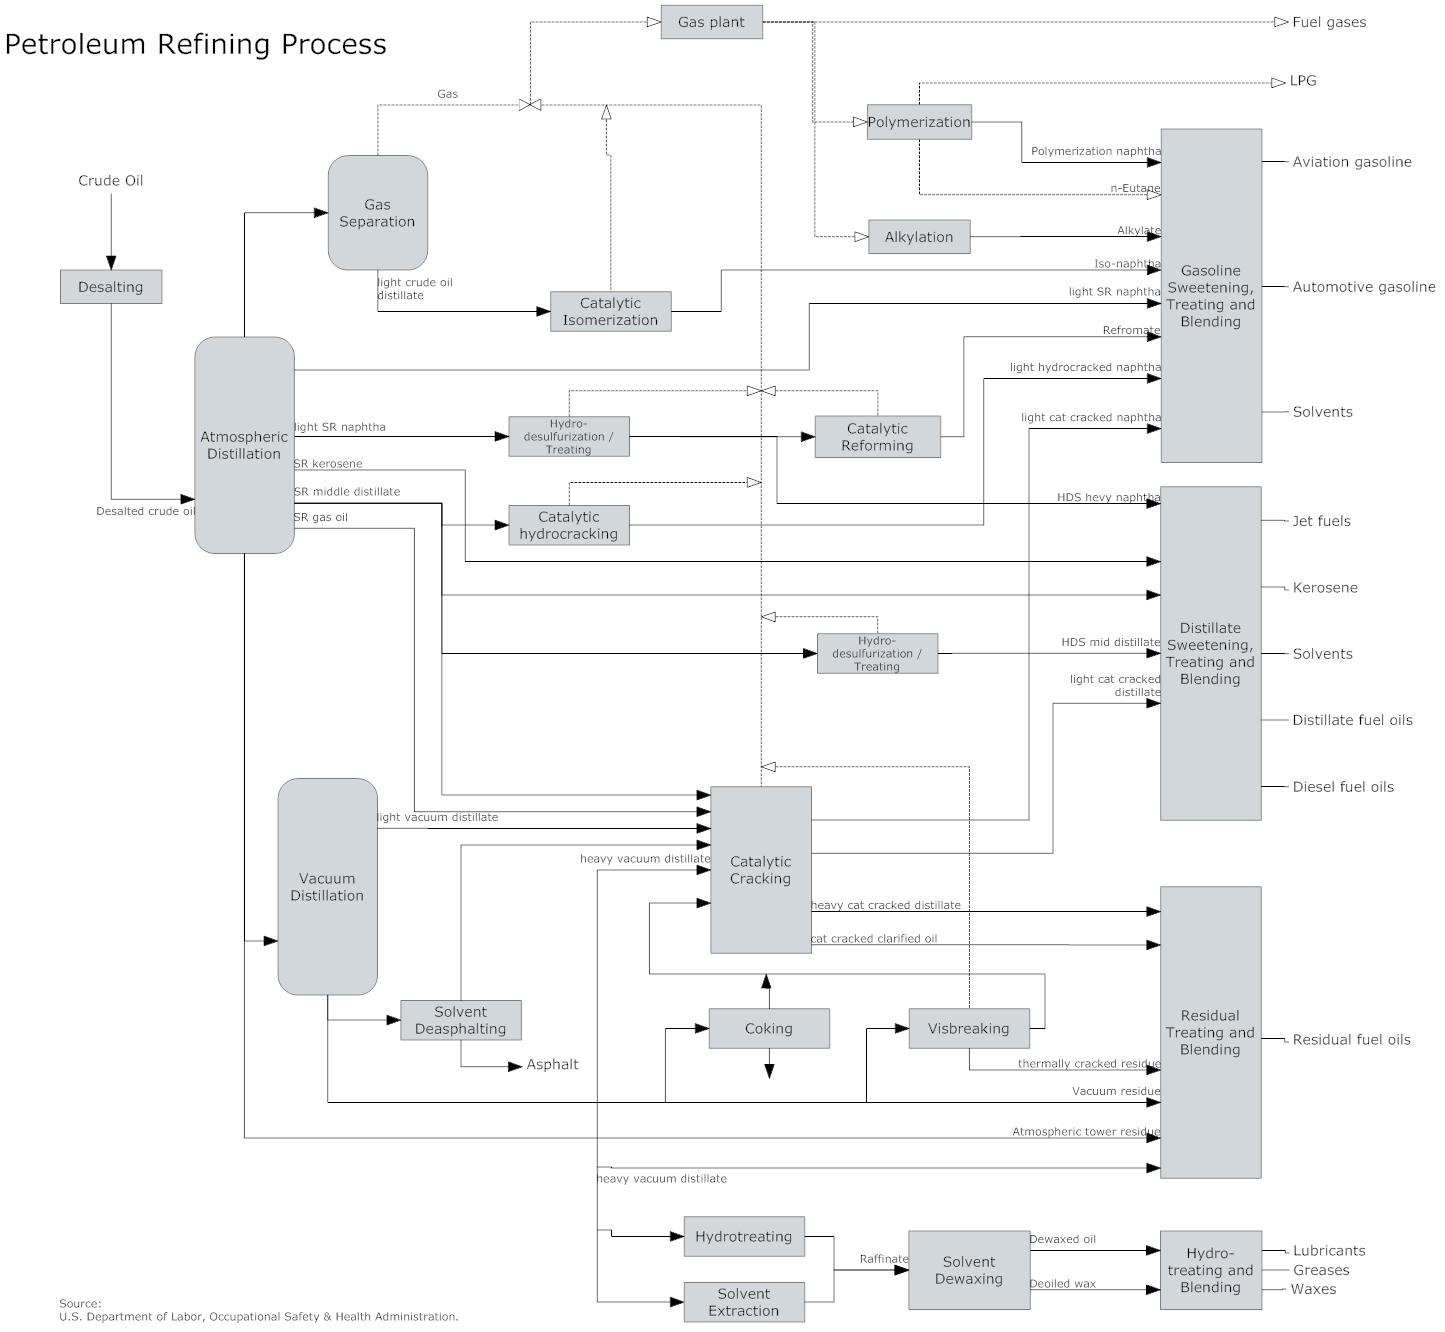 Flow Chart Diagram Maker